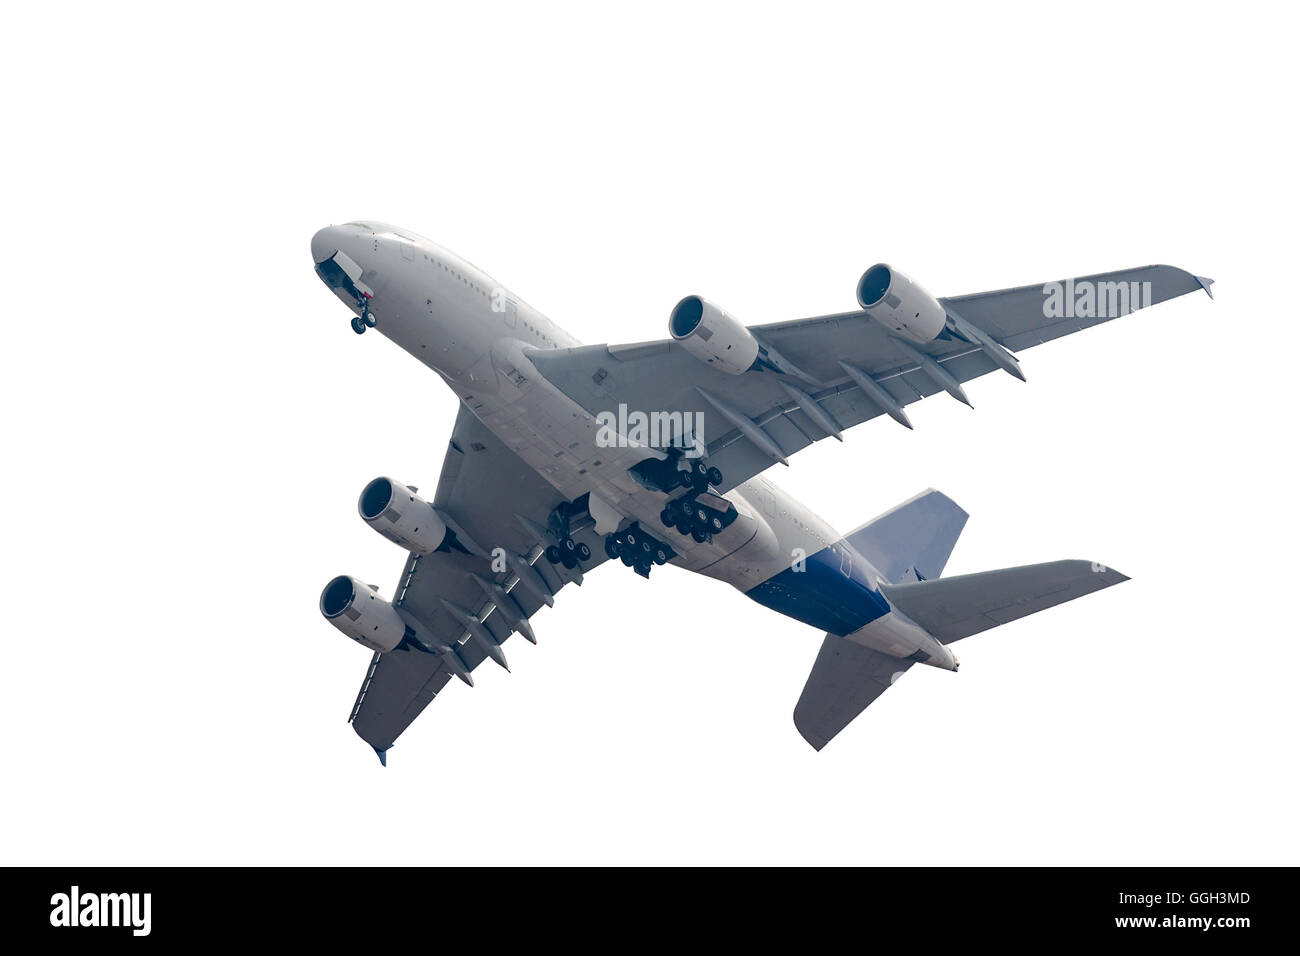 Airplane take off Stock Photo